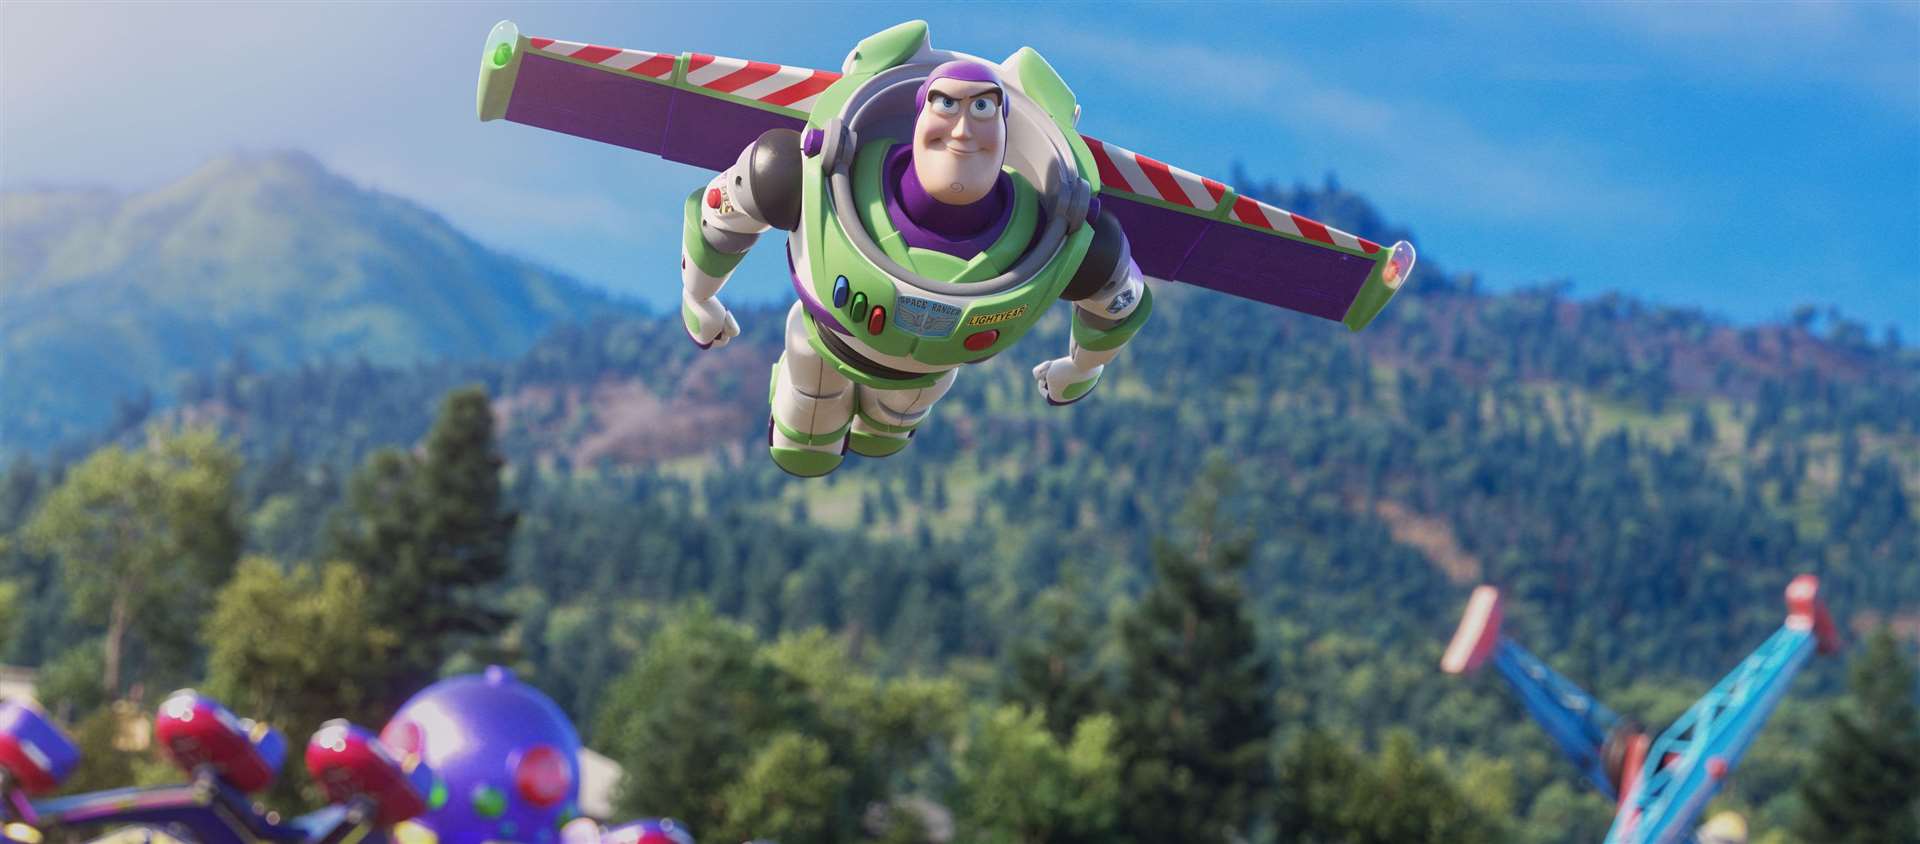 Toy Story 4 - Buzz Lightyear (voiced by Tim Allen) Picture: Disney Pixar